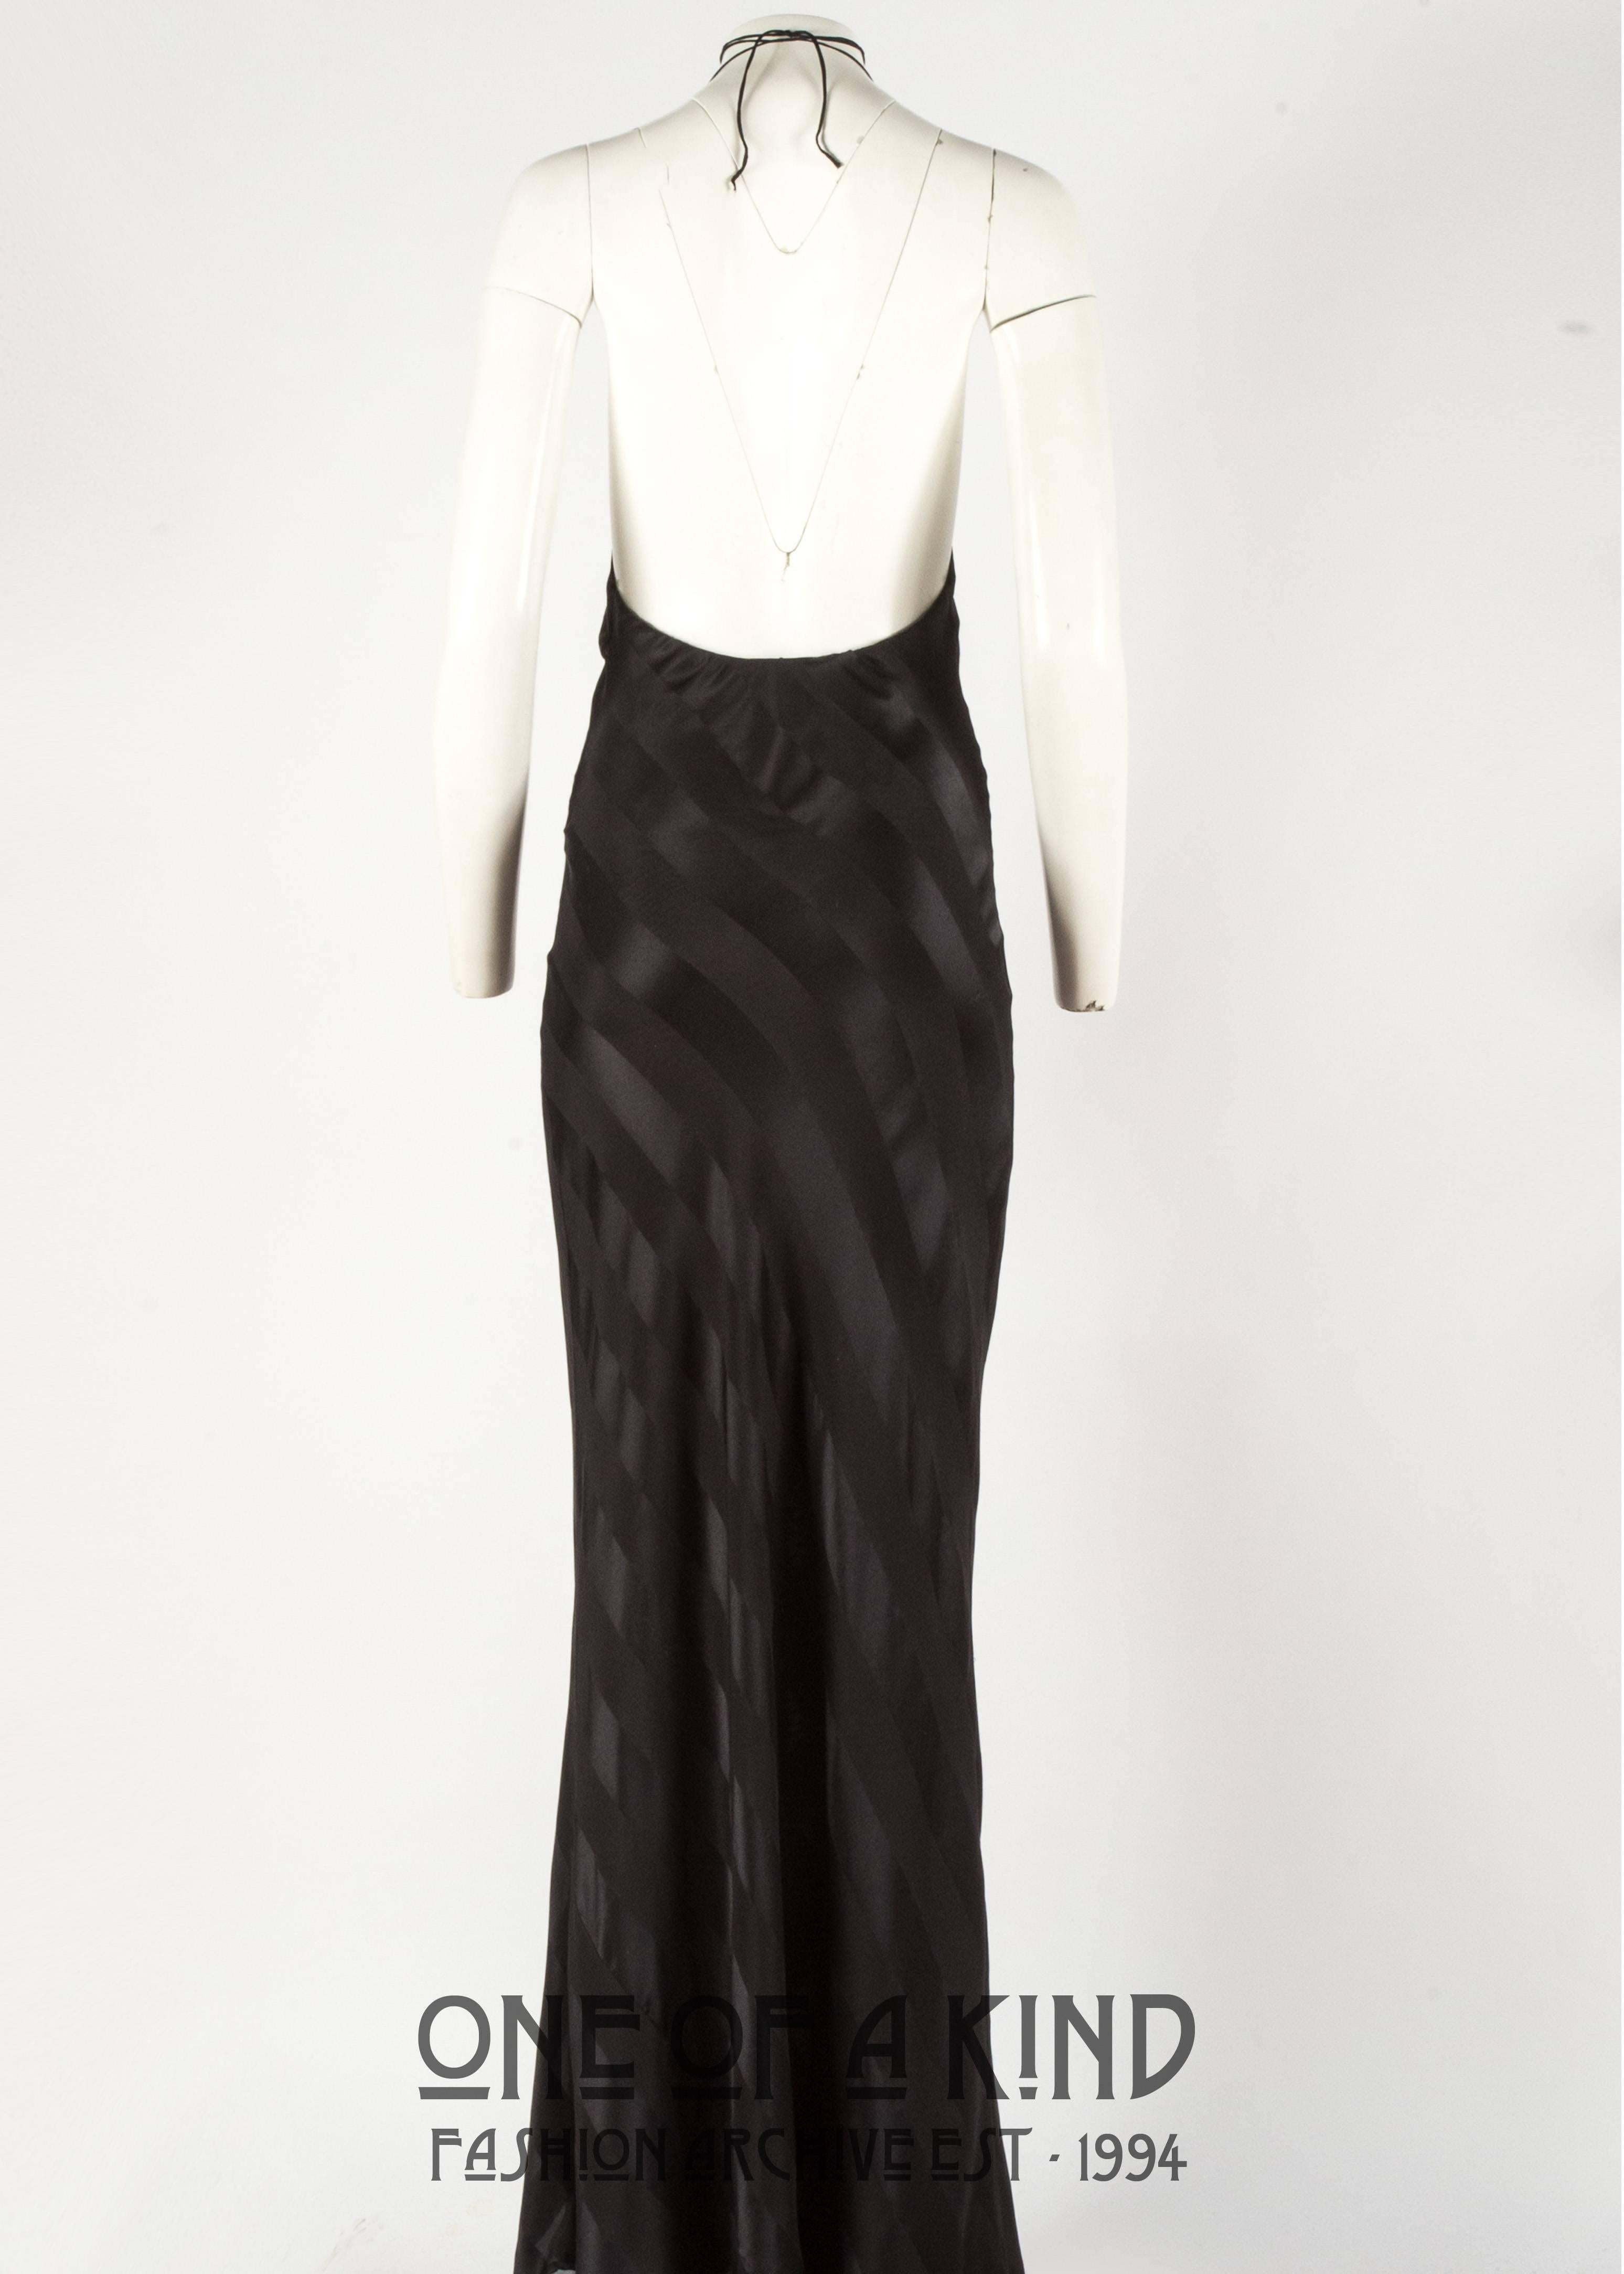 Women's or Men's Dolce & Gabbana 1990s black rayon striped halter neck evening dress